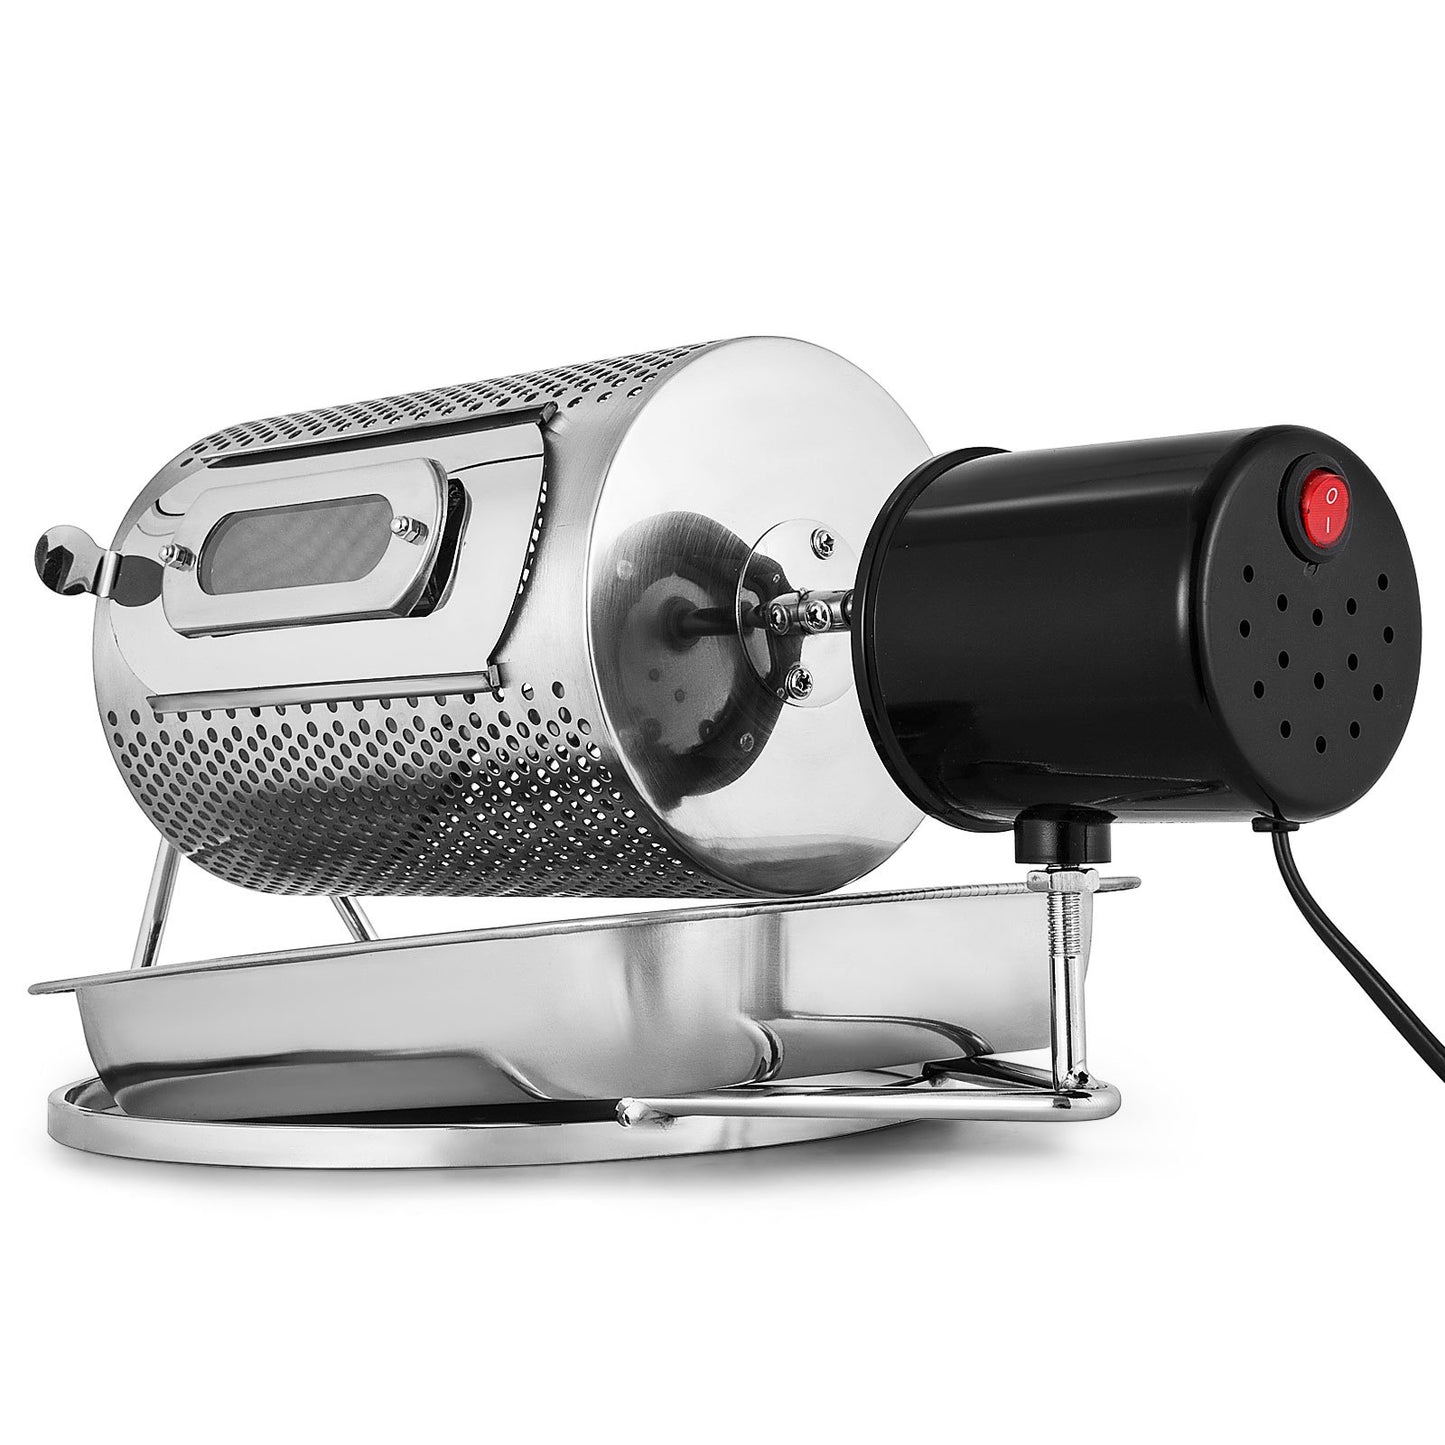 Stainless Steel Household Small Coffee Roasting Machine Roasting